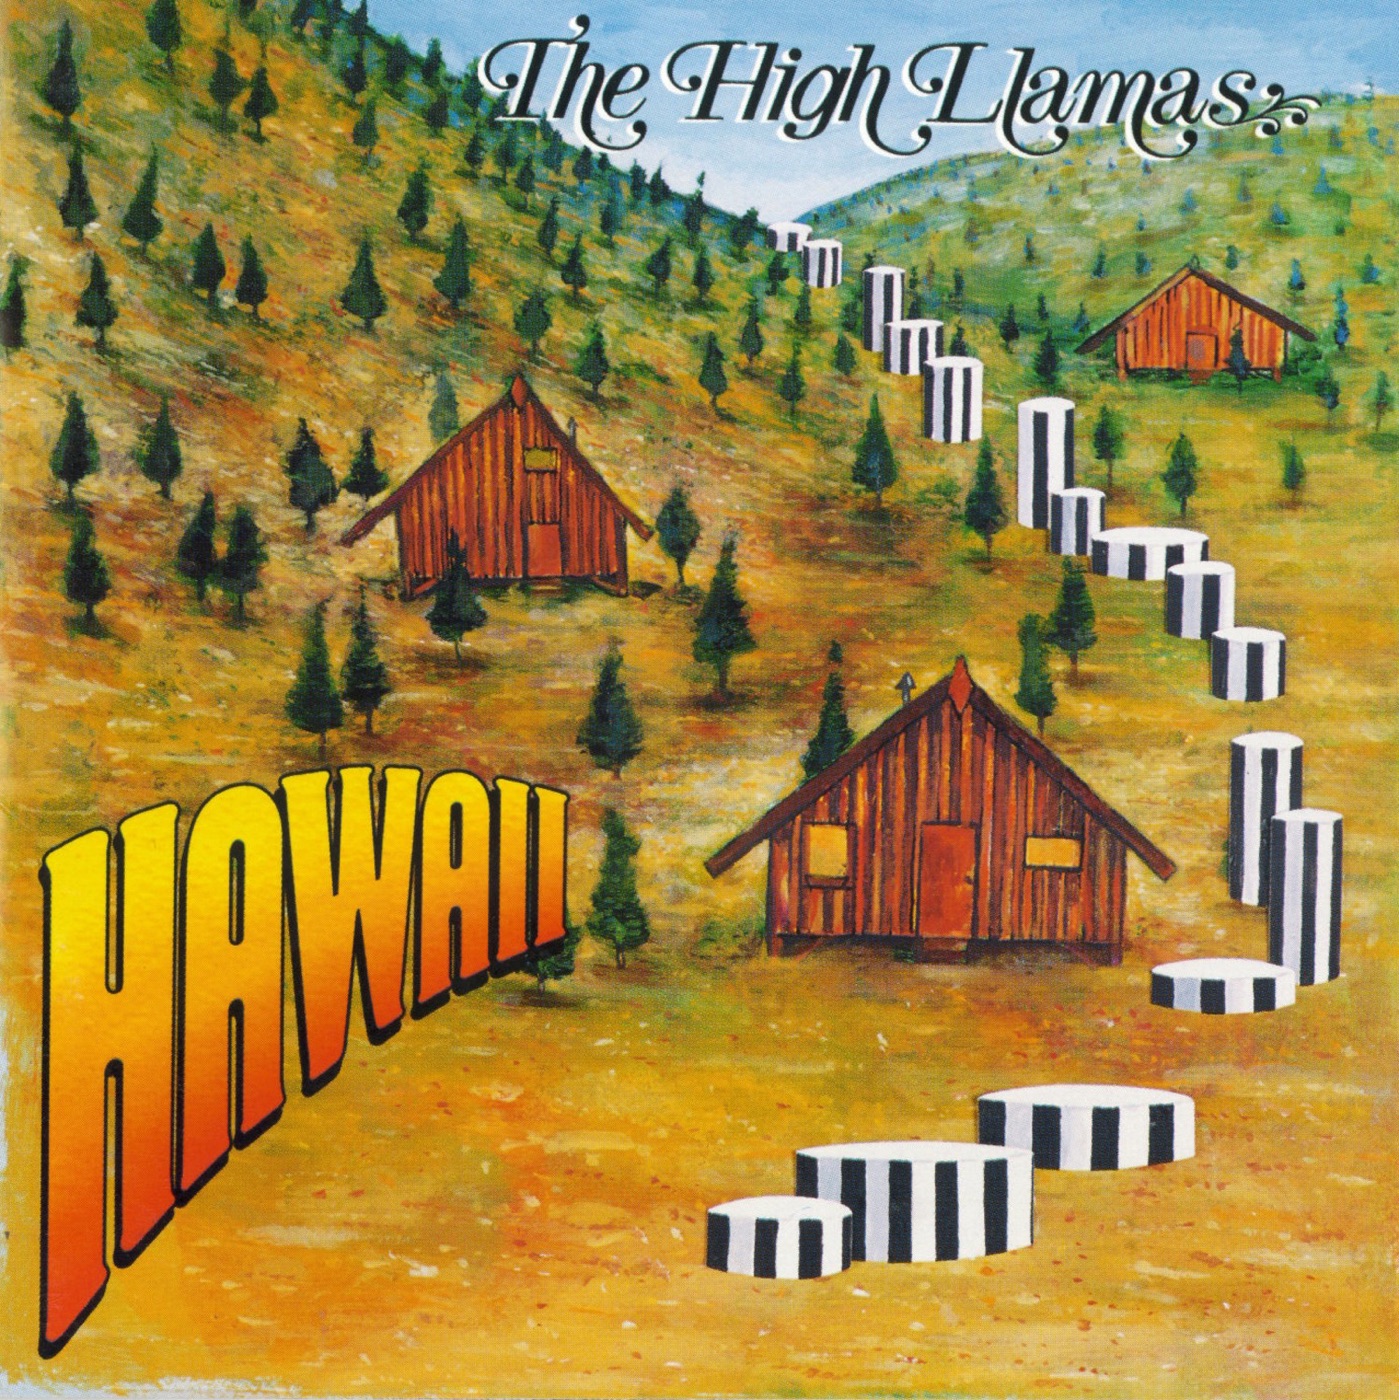 Hawaii by The High Llamas